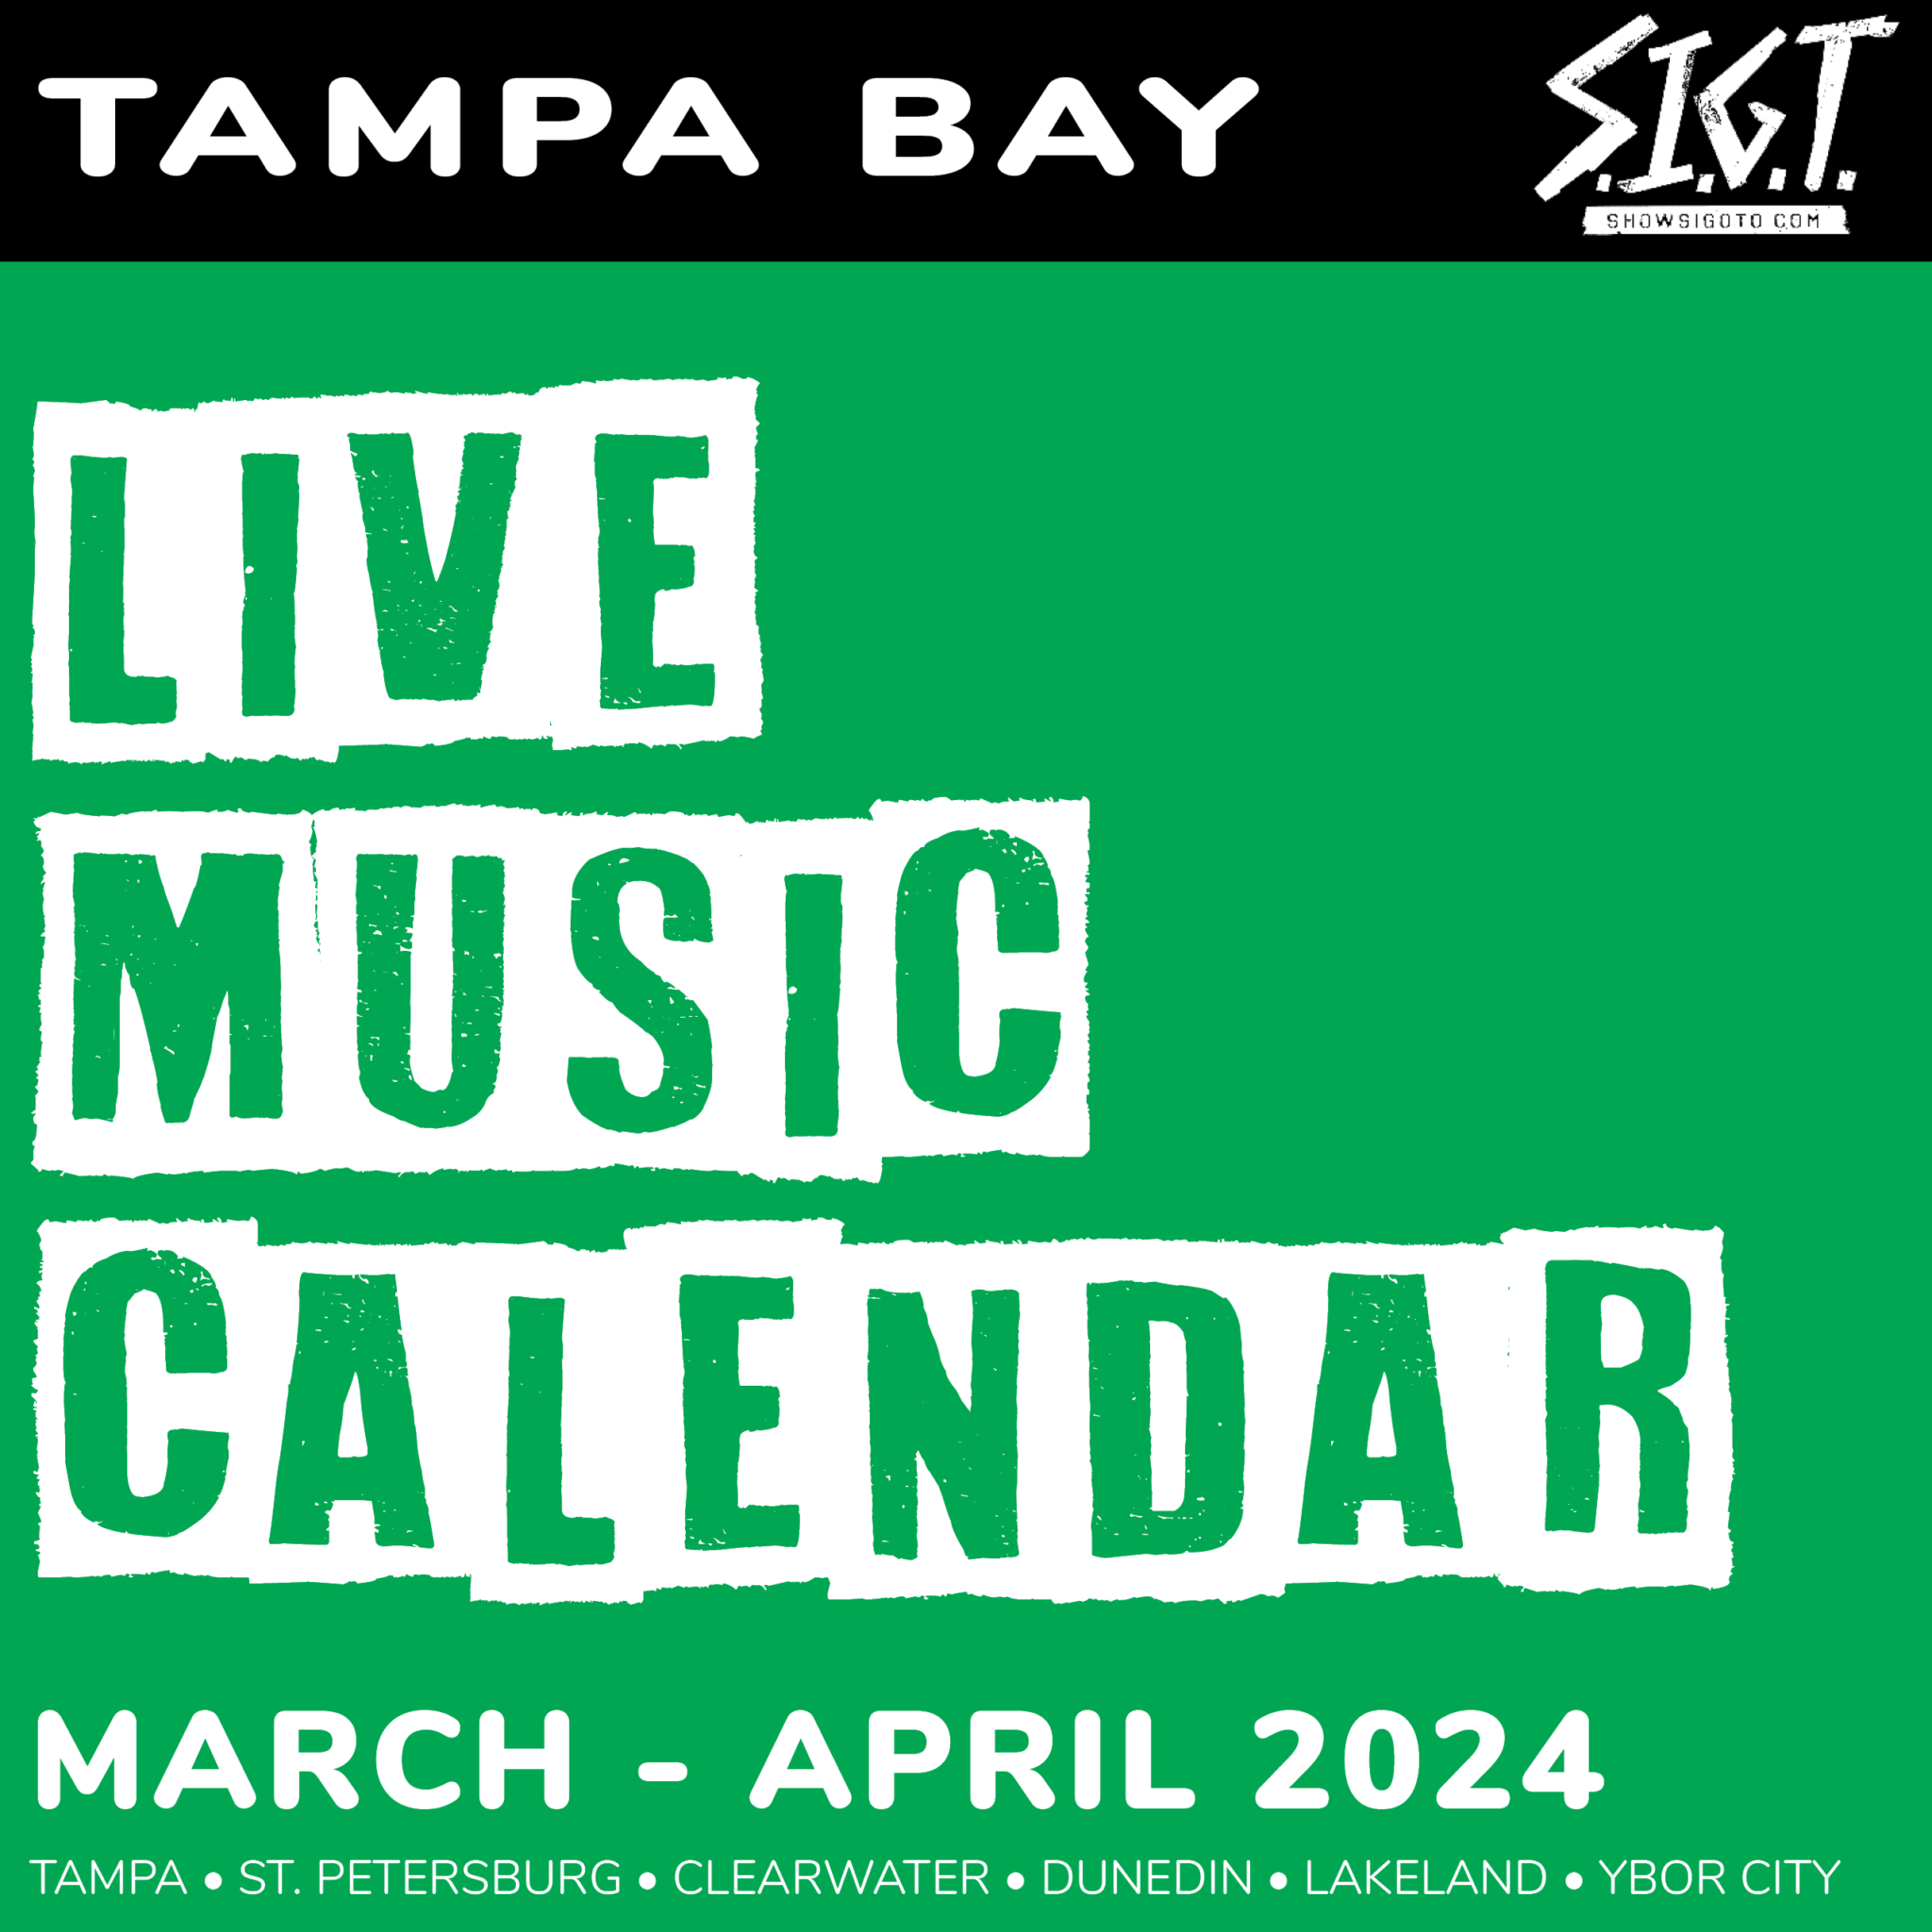 Tampa Bay Live Music Calendar March 2024